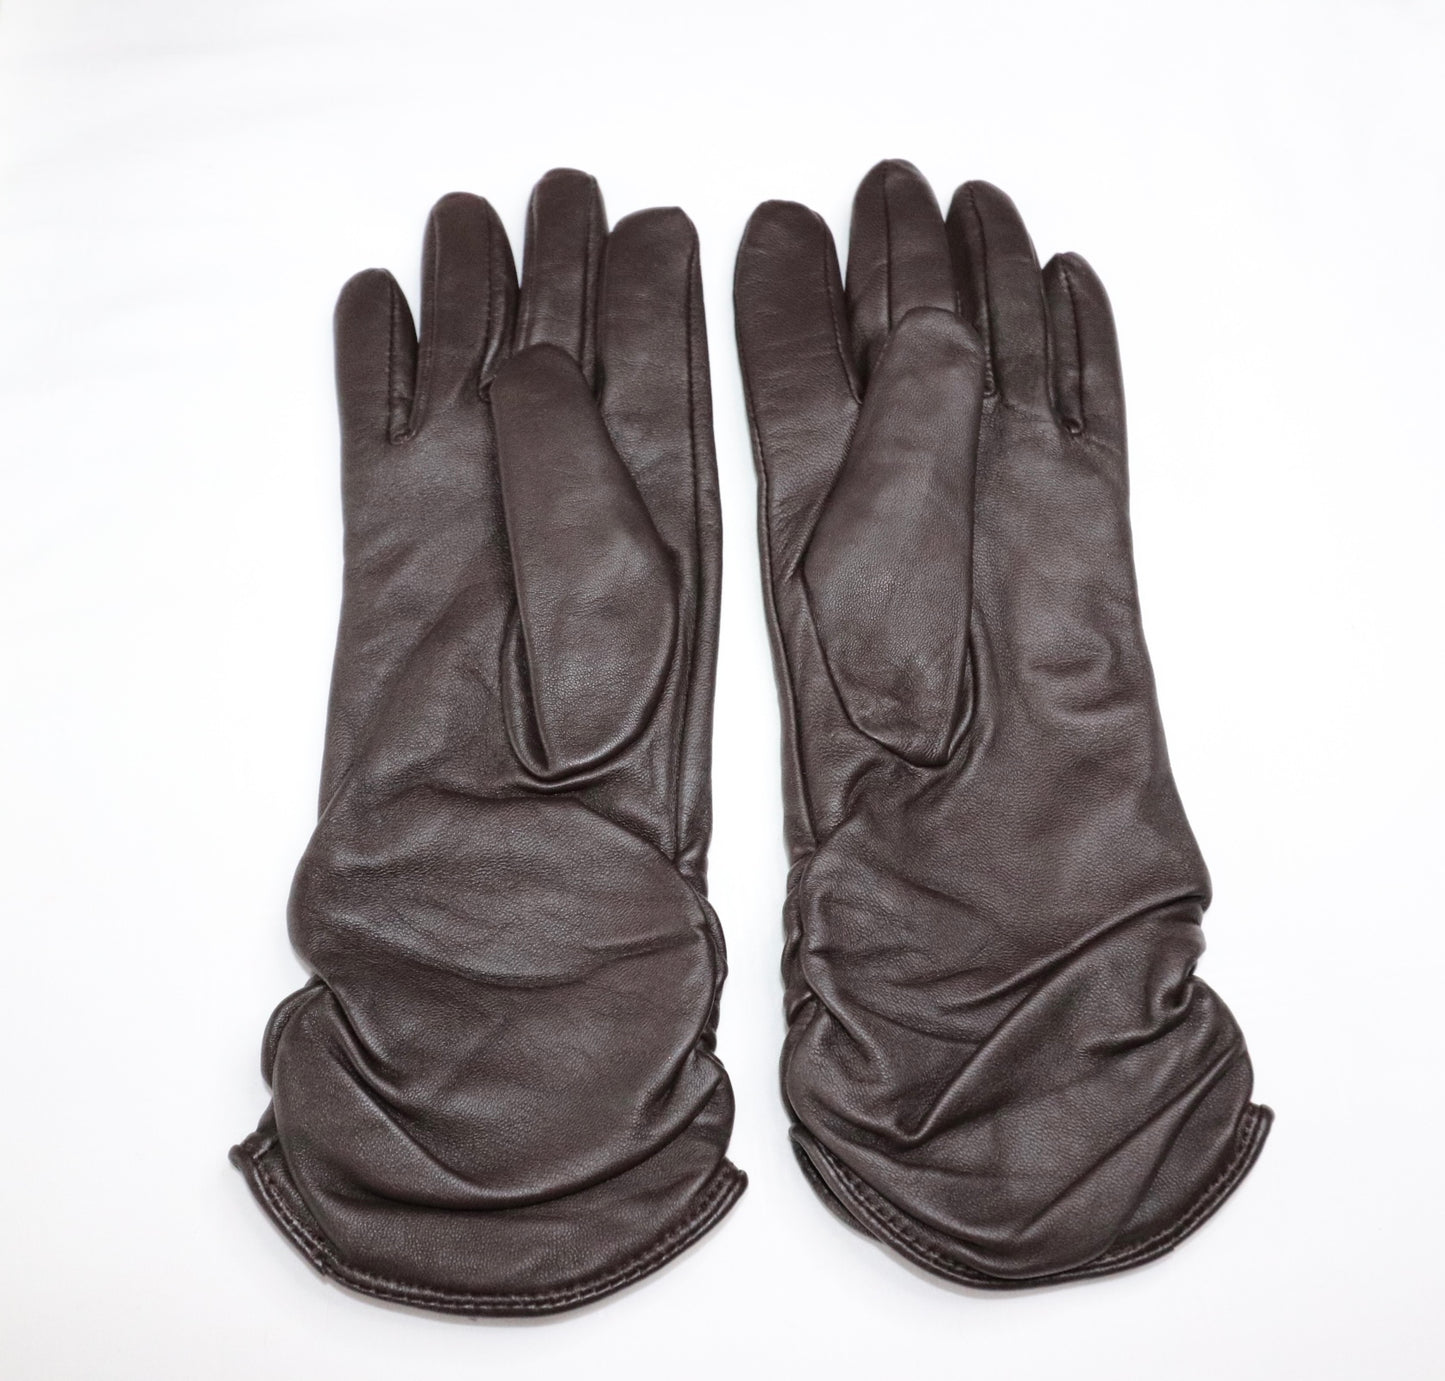 Vintage Brown Leather Women's Gloves